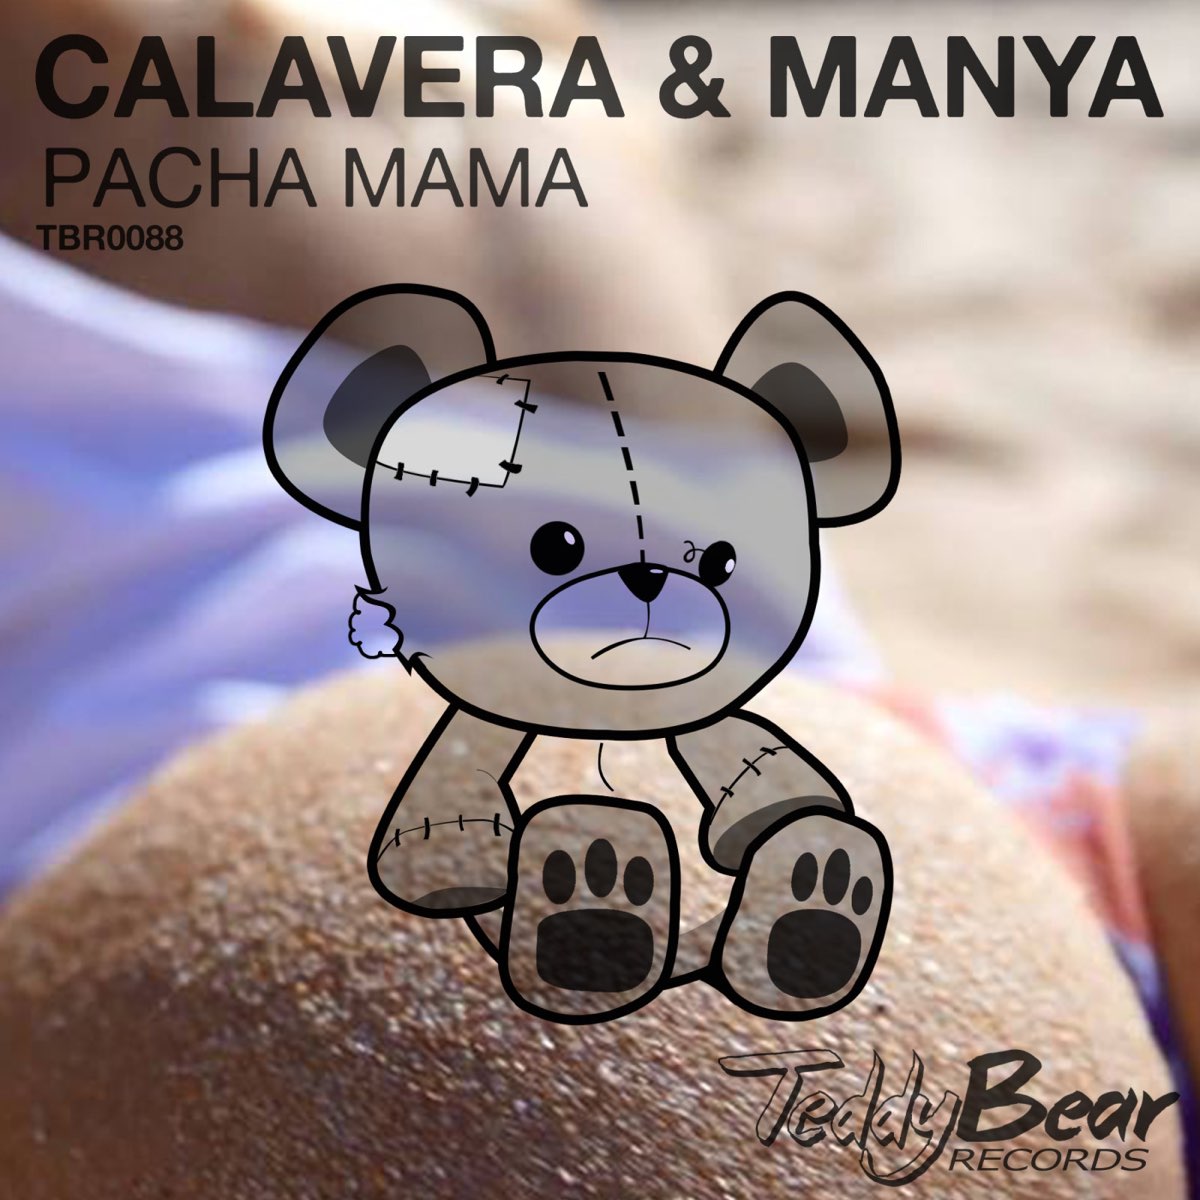 Pacha mama. Calavera Manya - Pacha mama Original Mix. Pacha mama II. Pacha mama II Art. Песня ты танцуешь глазками маня